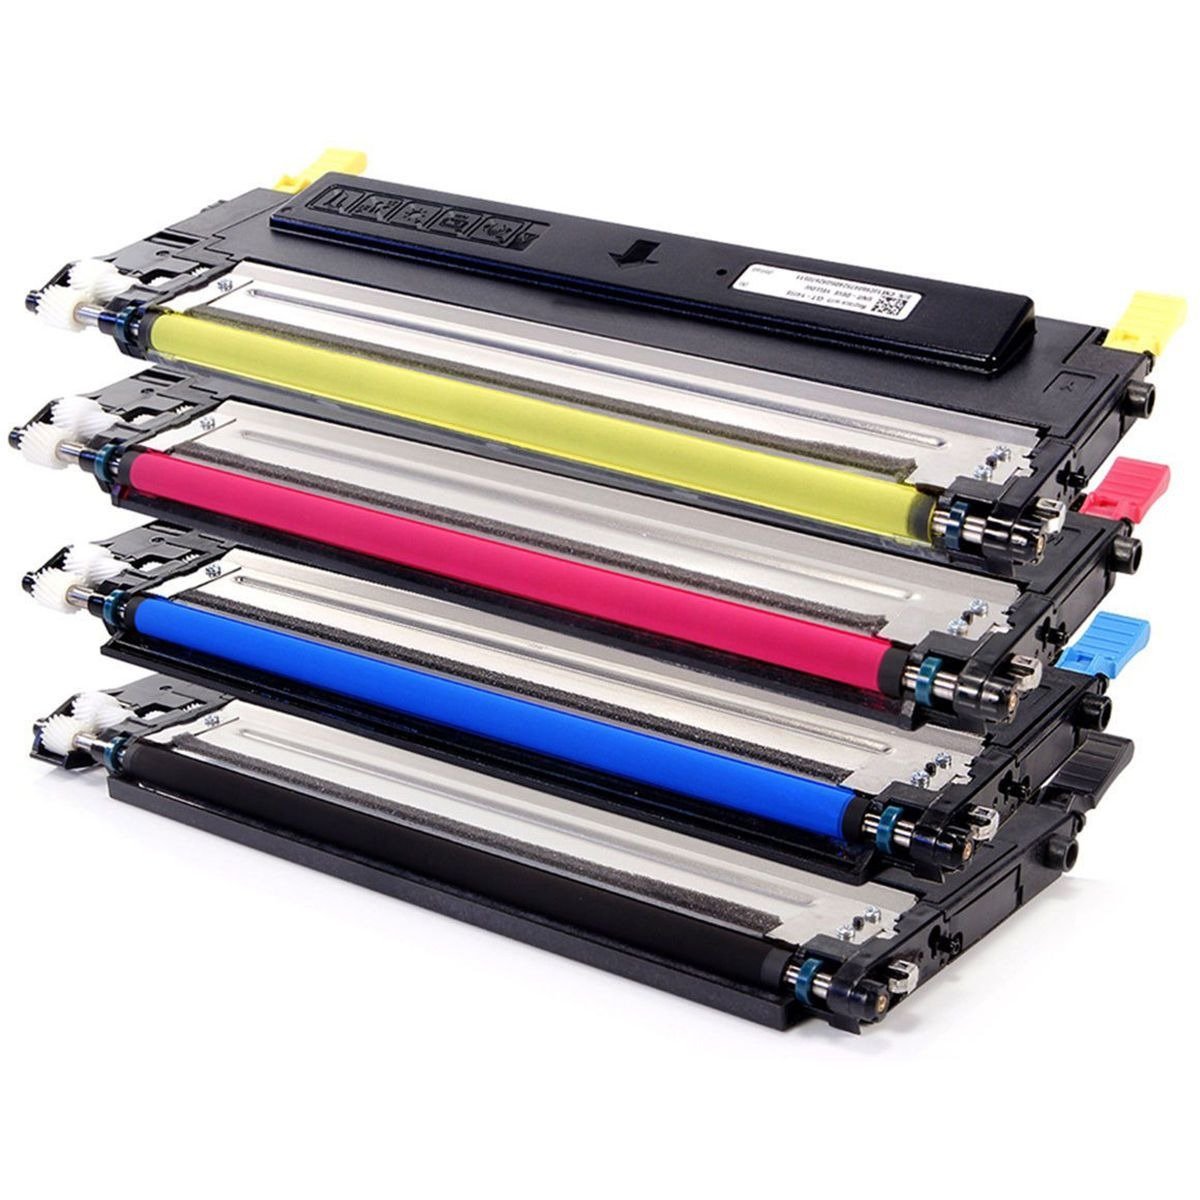 Compatible Samsung CLT-409 Printer Laser Toner Cartridge Set of 4 (Black Cyan Yellow Magenta)